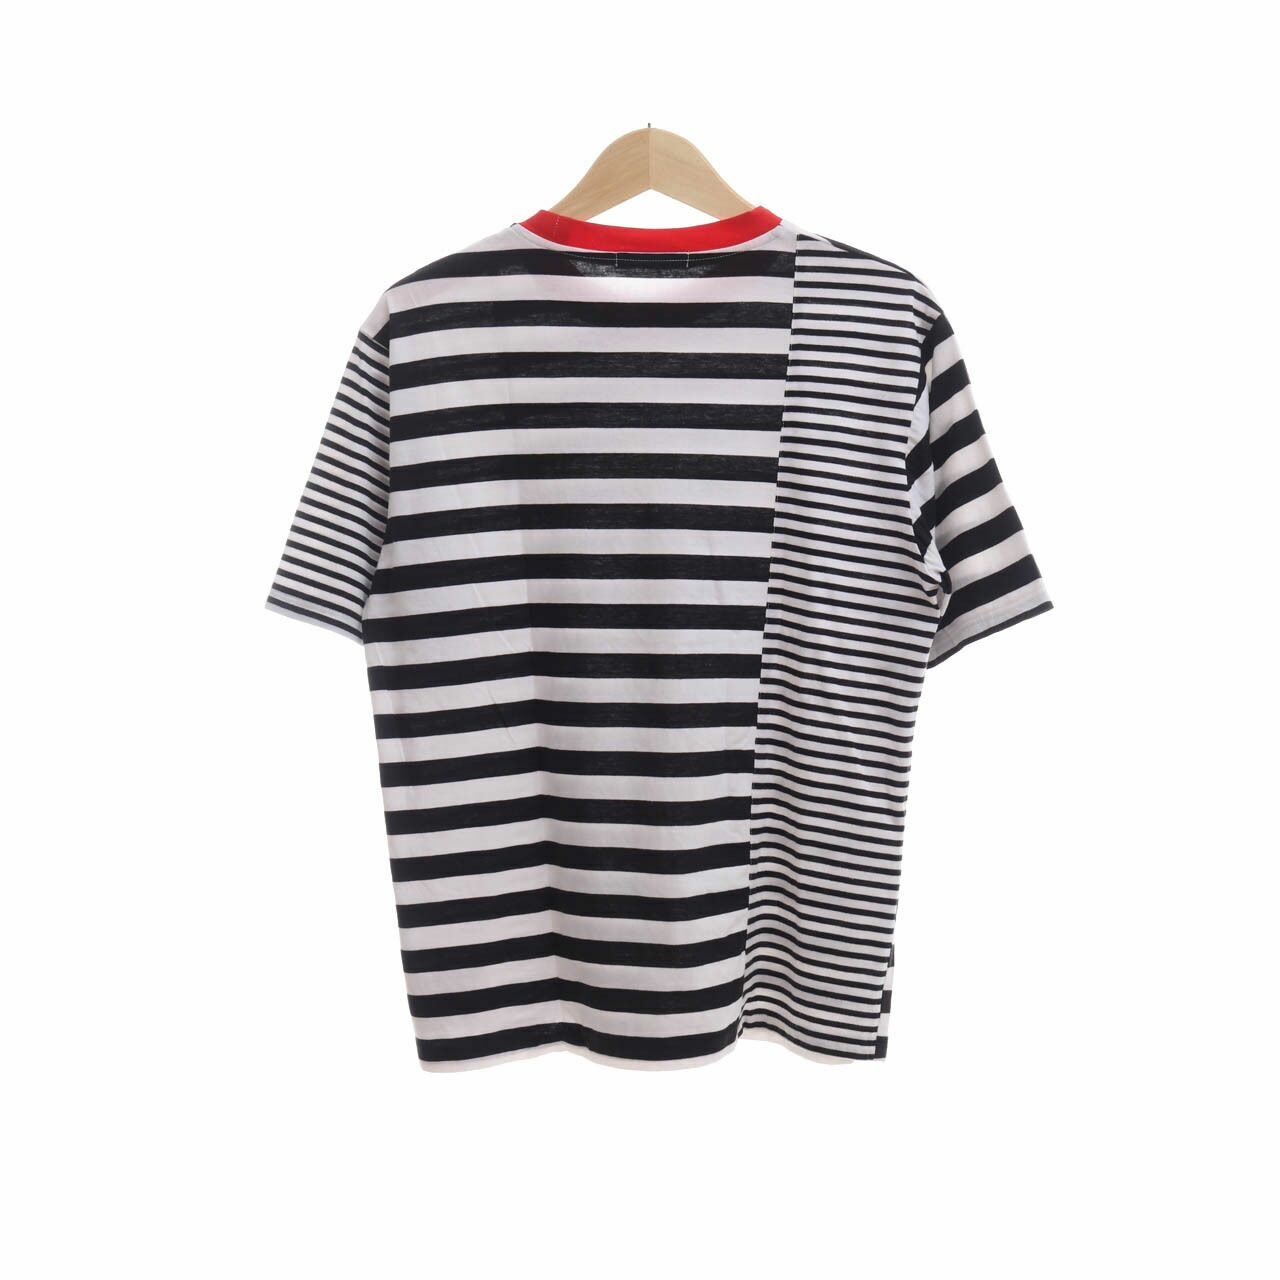 SVH Black & White Stripes T-Shirt